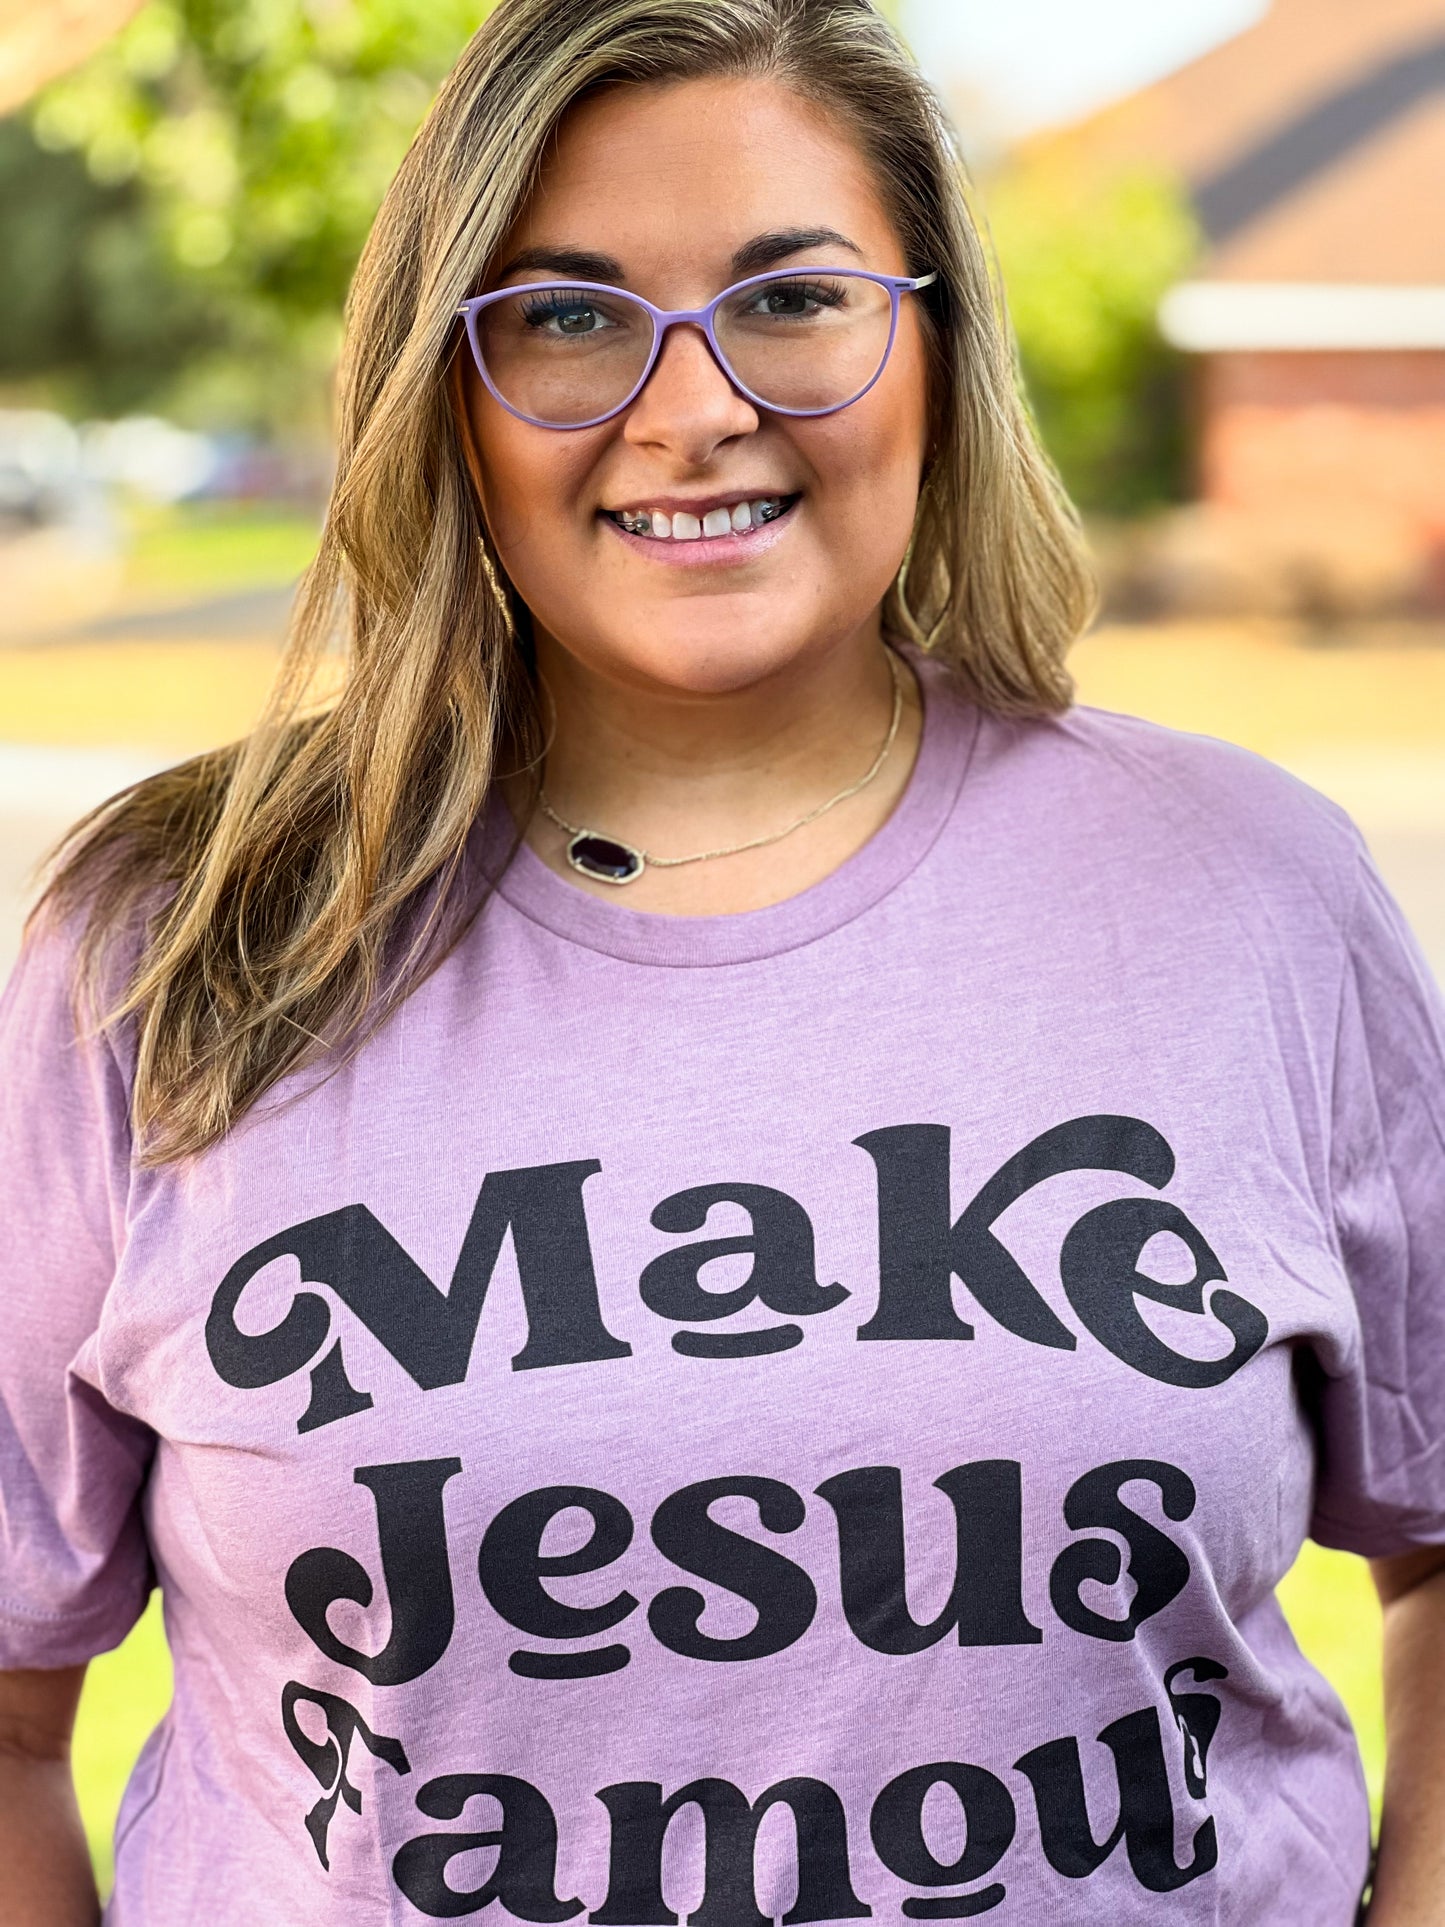 Make Jesus Famous